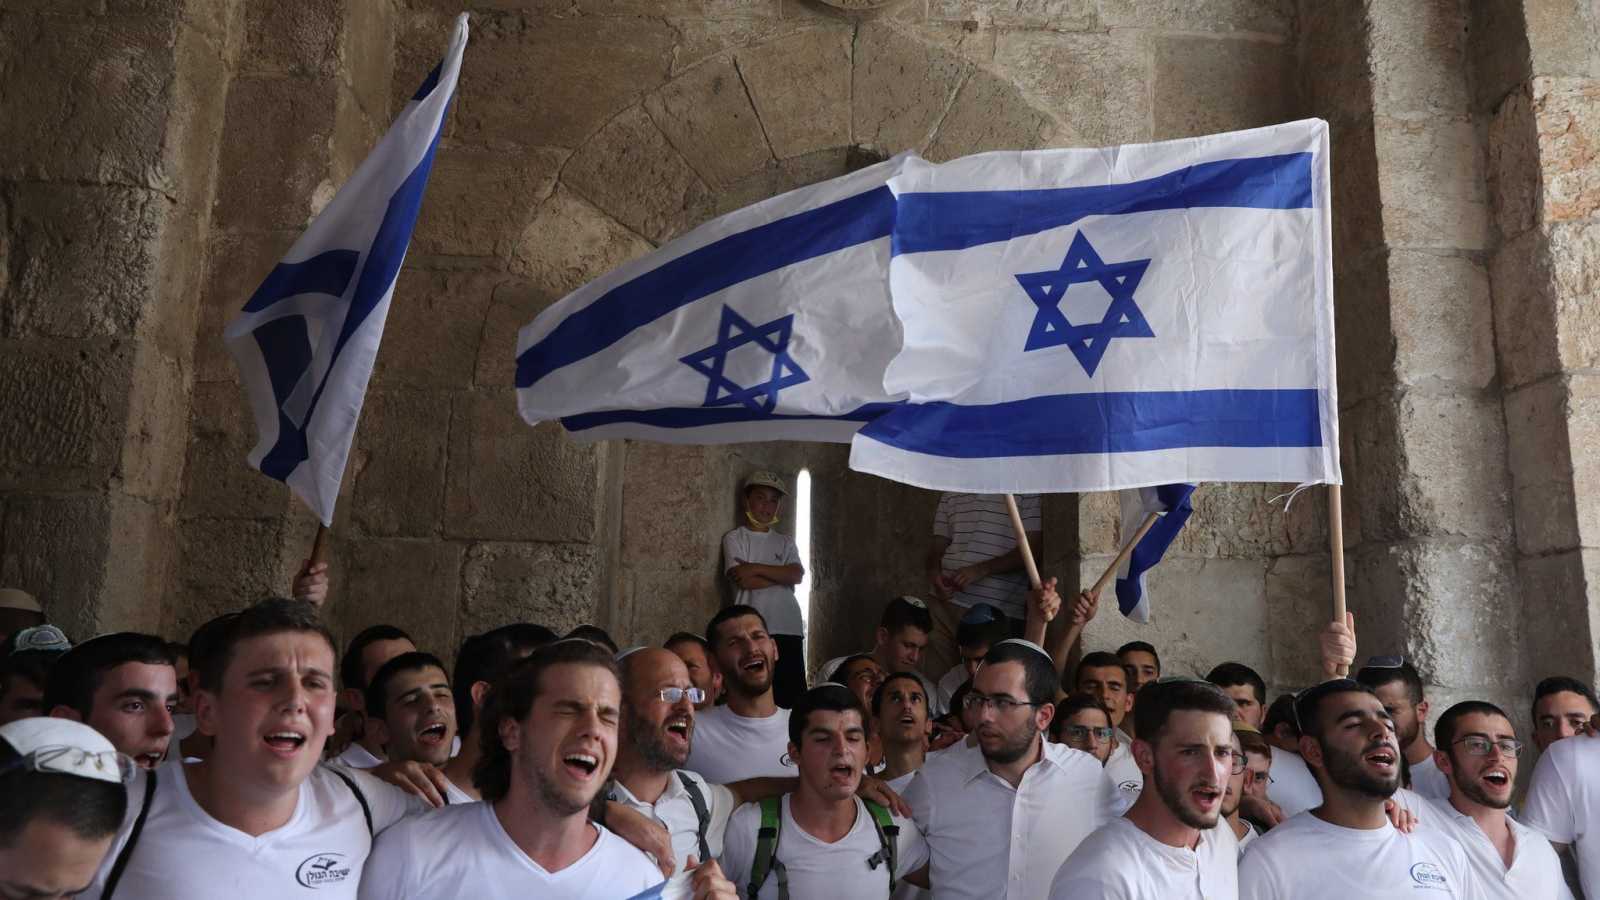 Fotó: Facebook/Flags and emblems of Israel